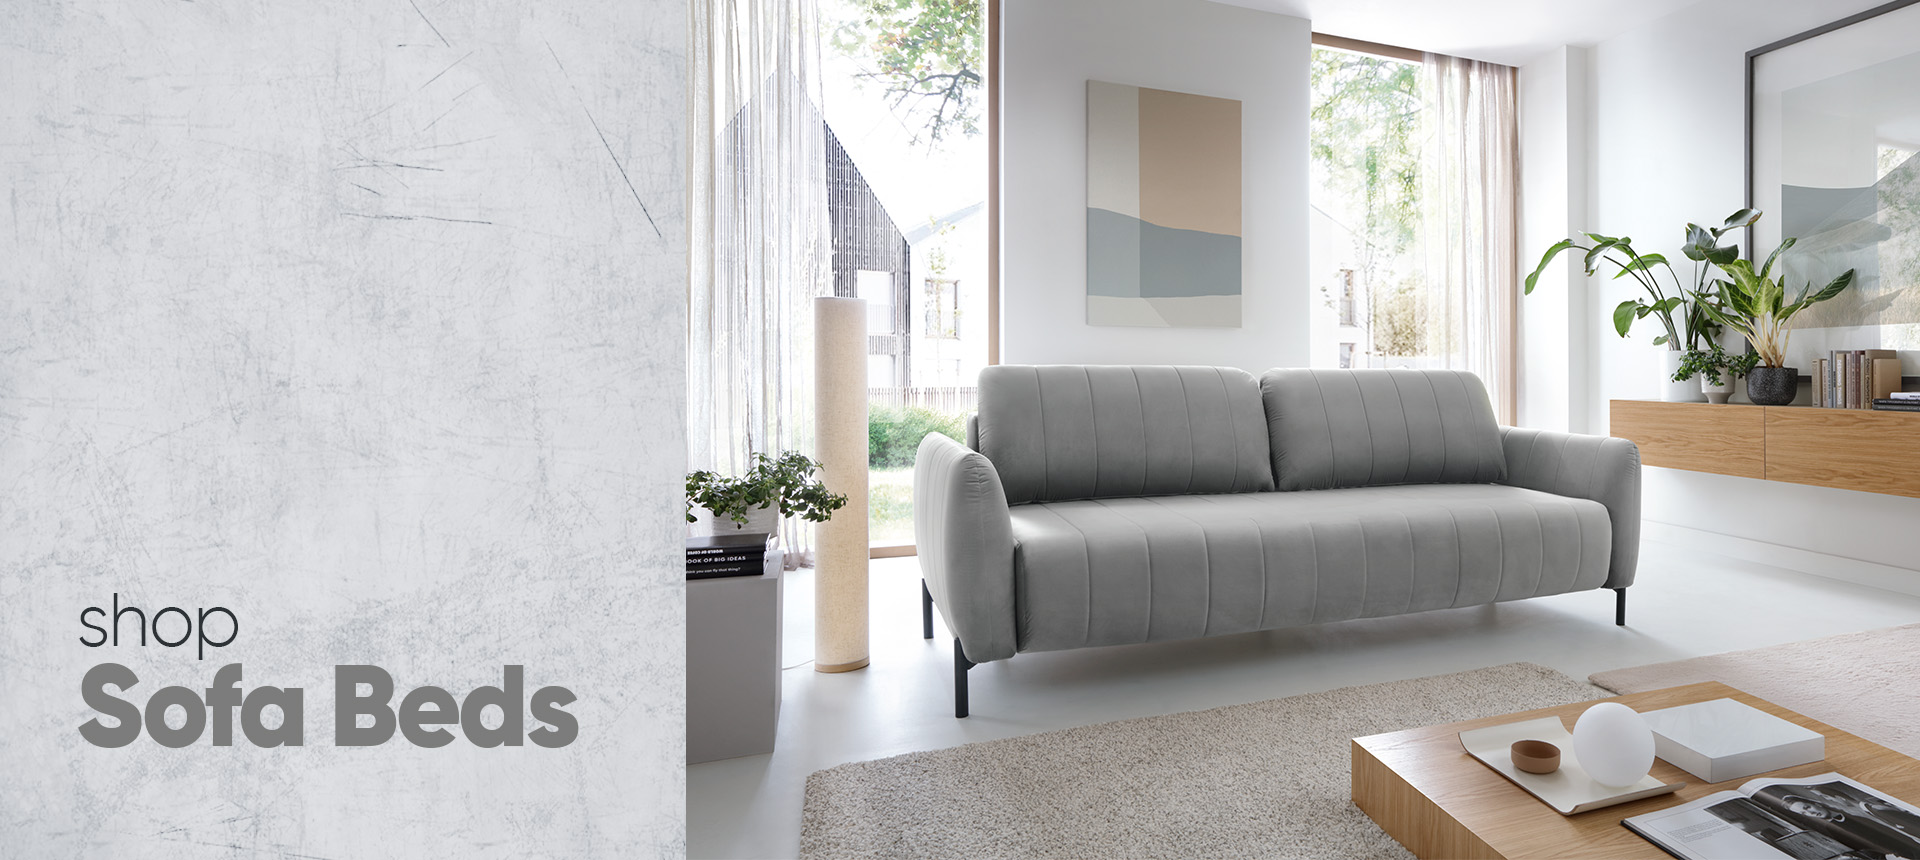 Sofa Beds - Online store Smart Furniture Mississauga